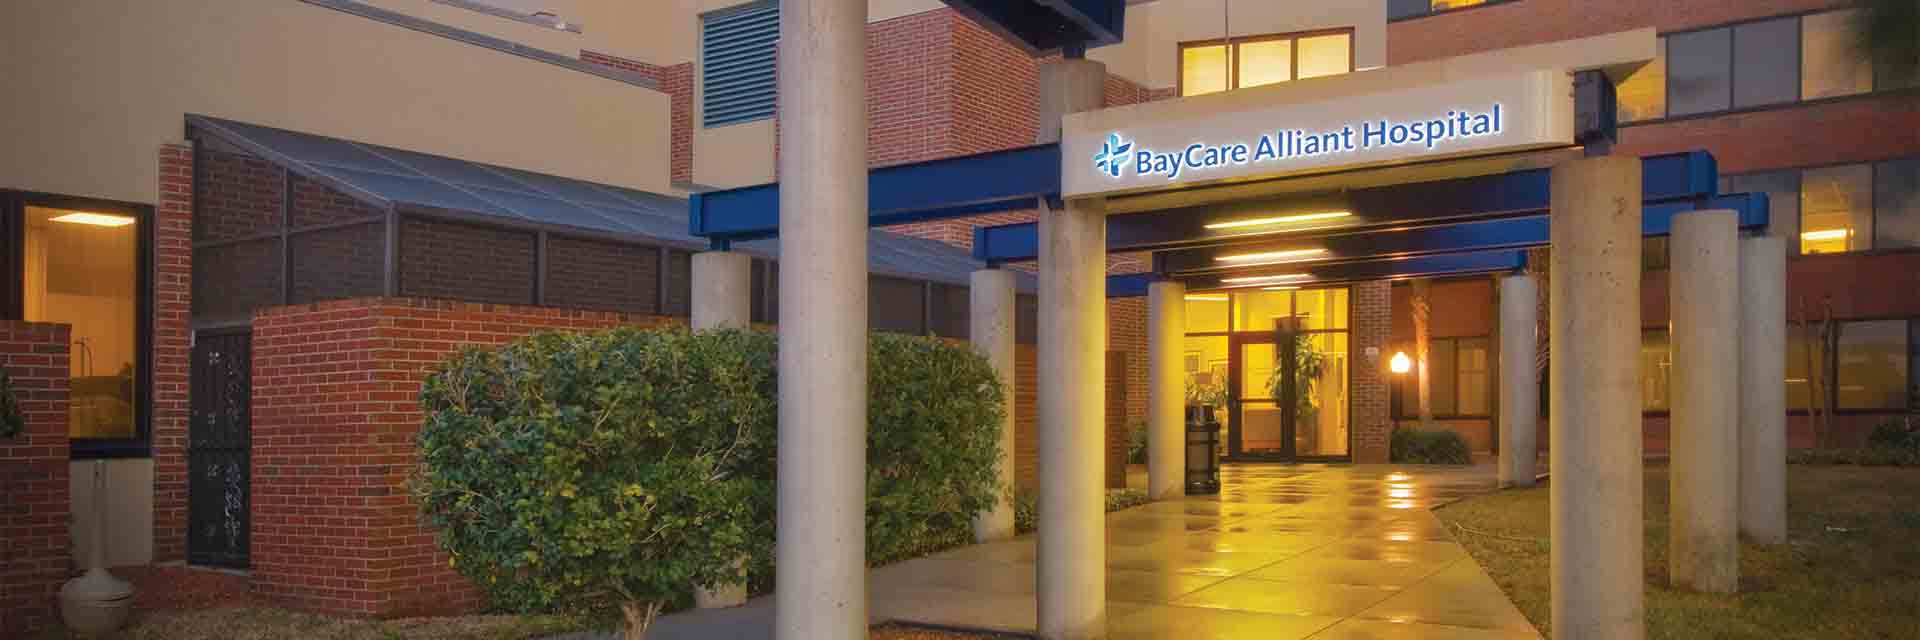 BayCare Alliant Hospital